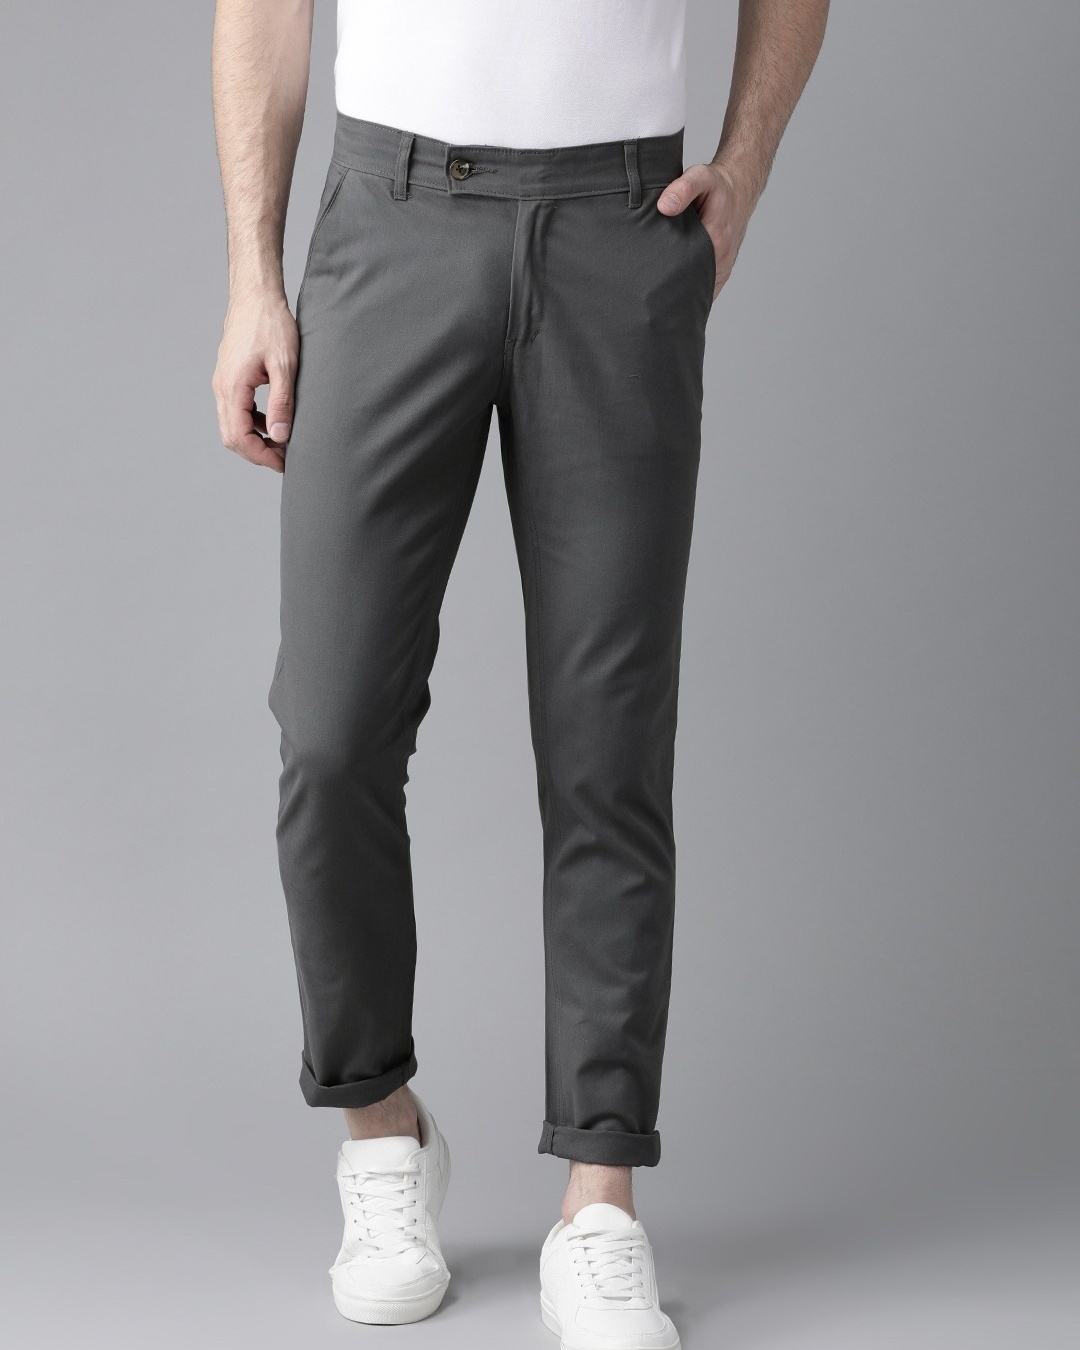 Buy Men's Grey Slim Fit Chinos Online at Bewakoof